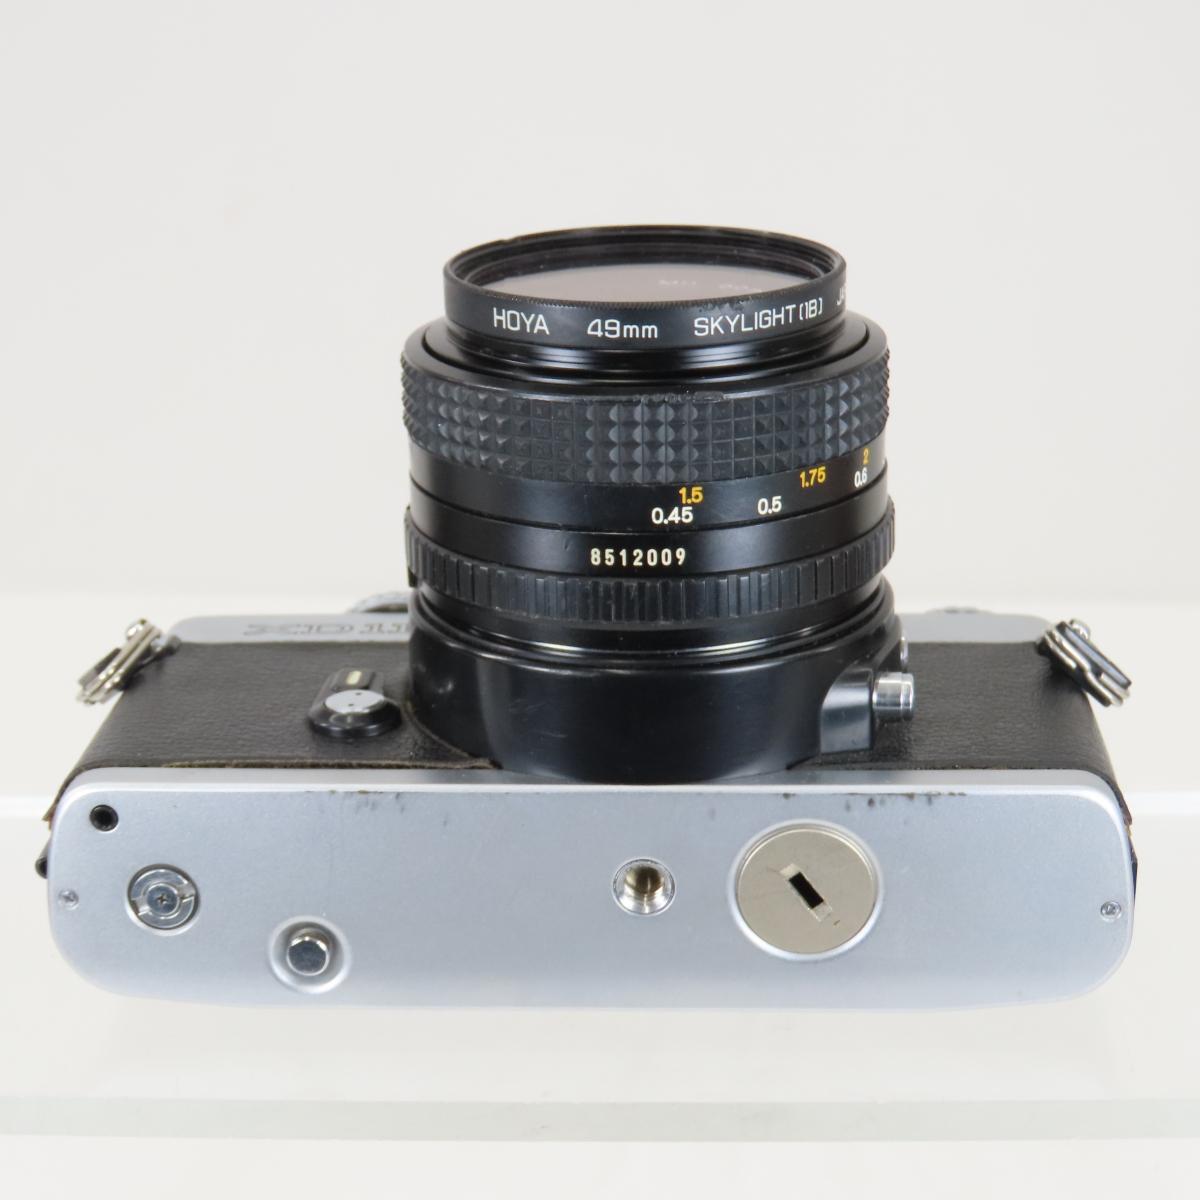 Minolta XD-11 35mm Film Camera with Original Box